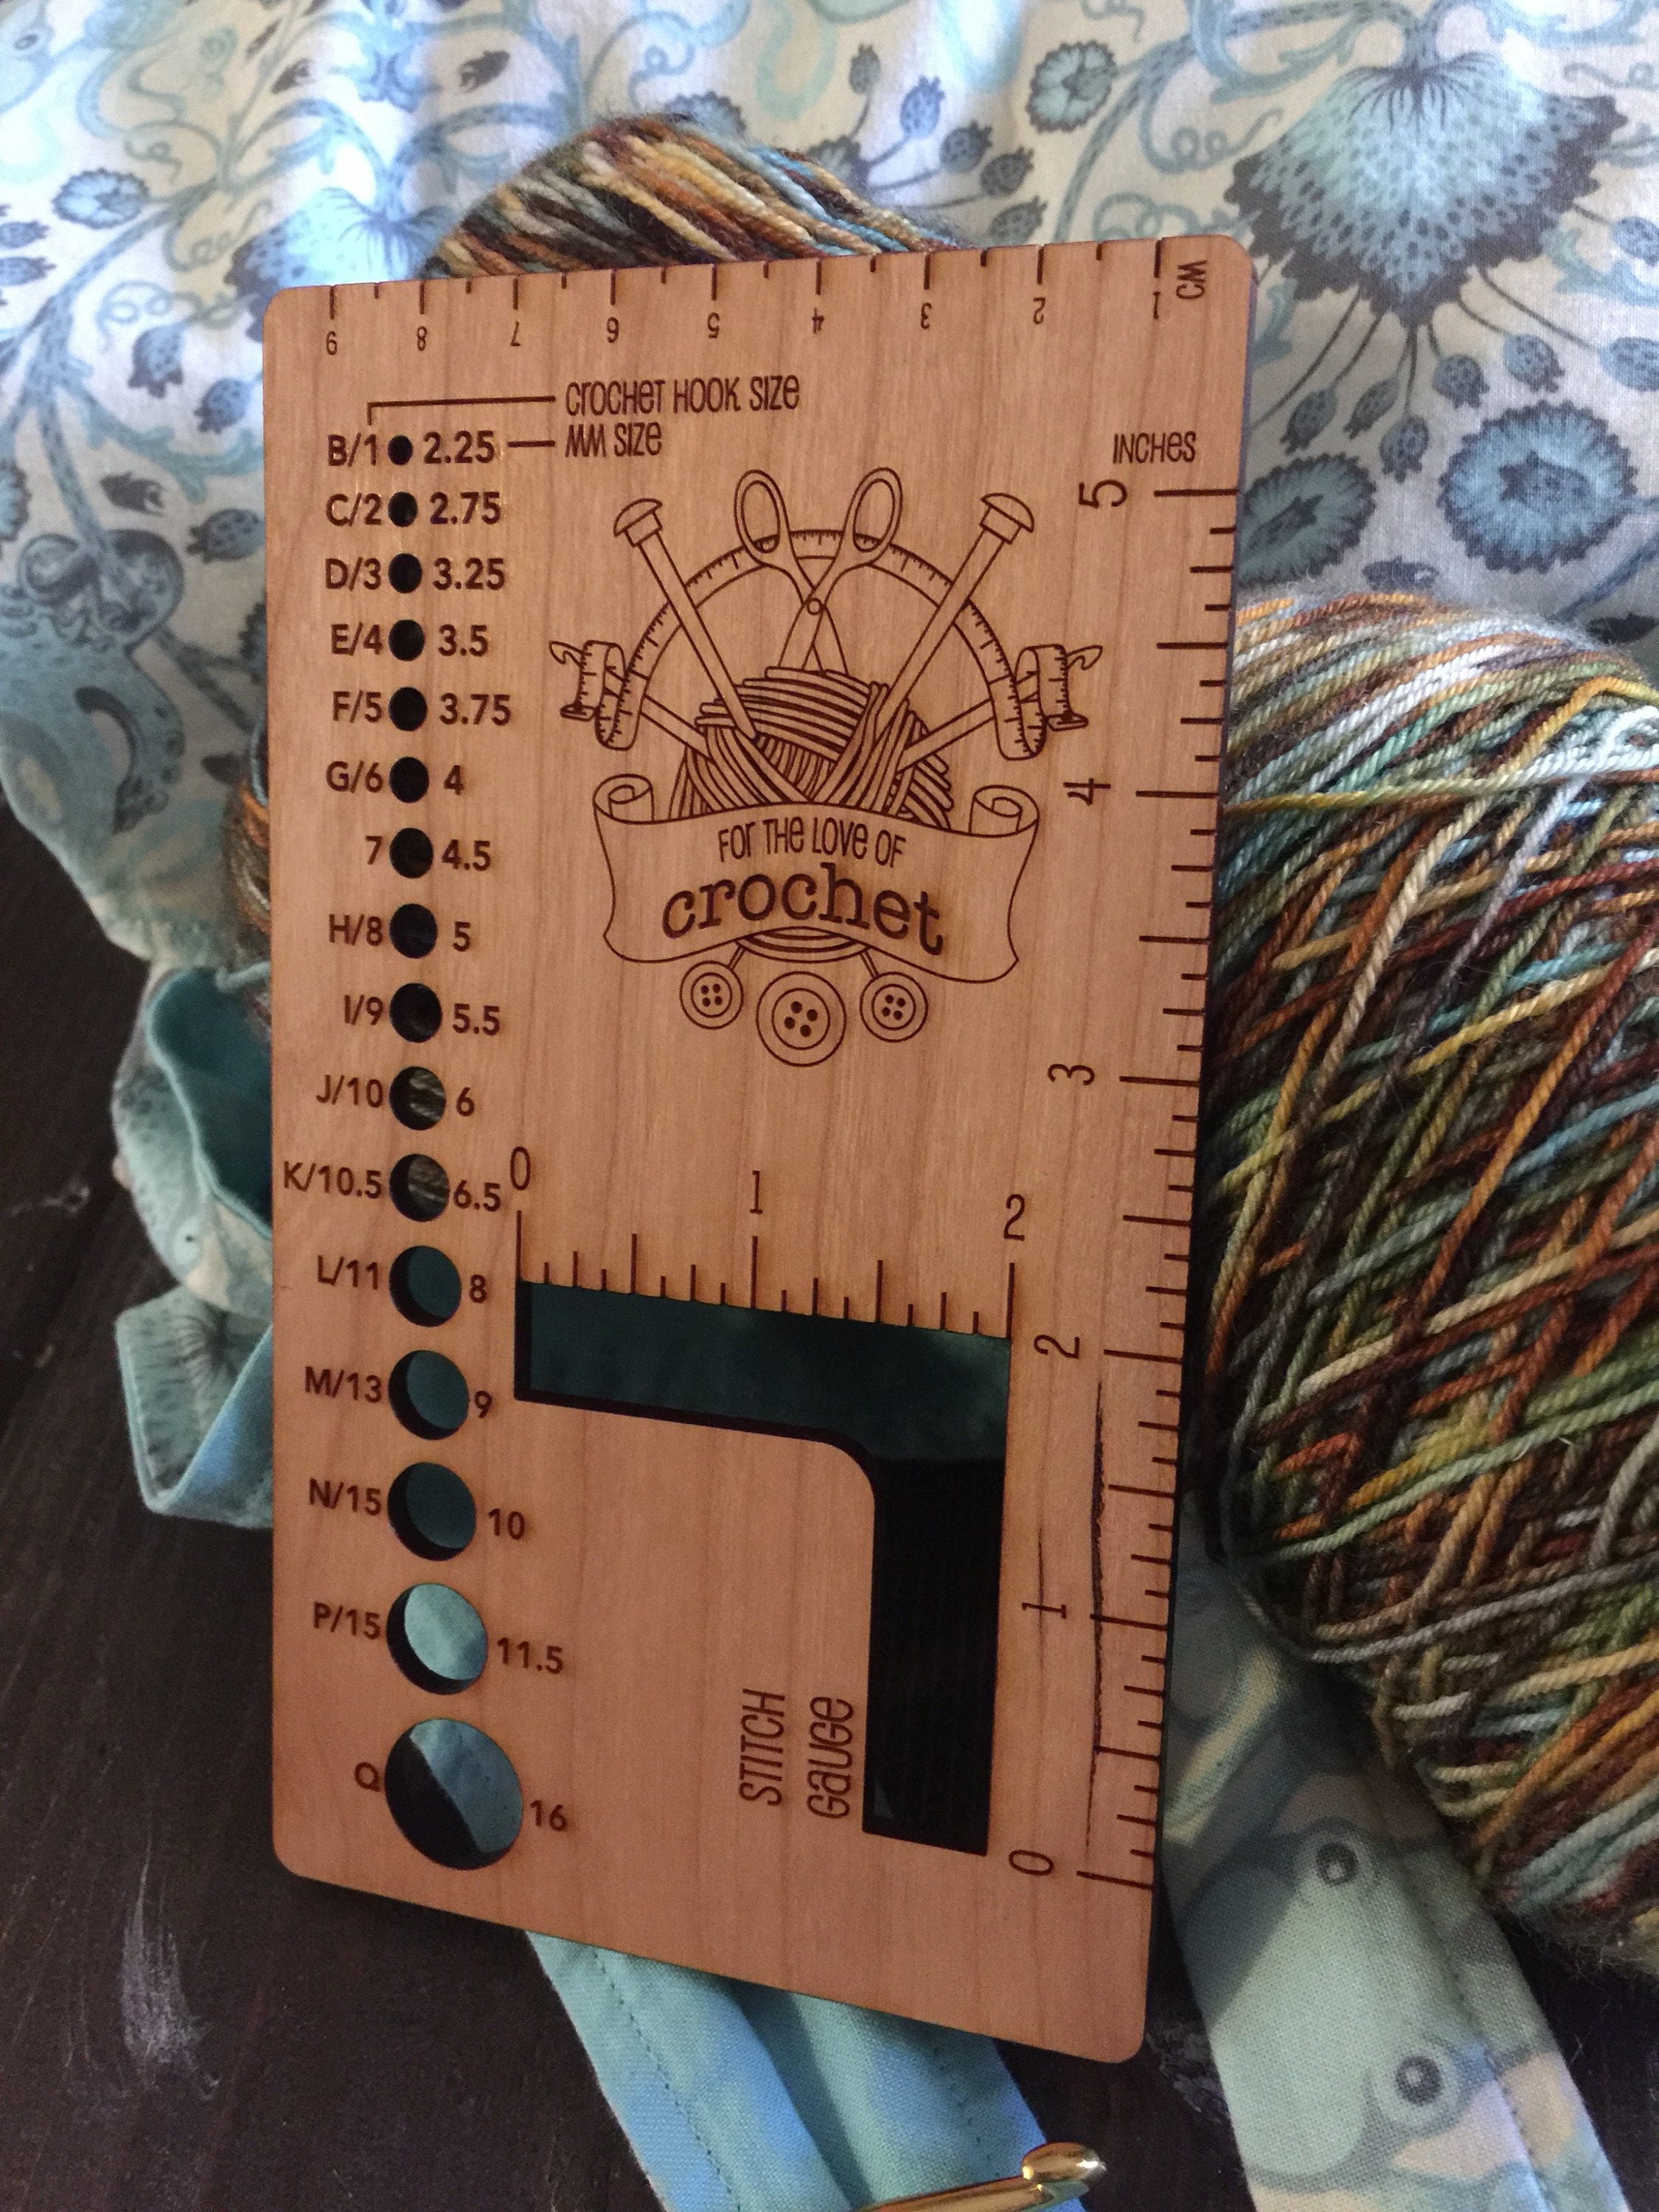 Hook Gauge And Ruler For Crocheters